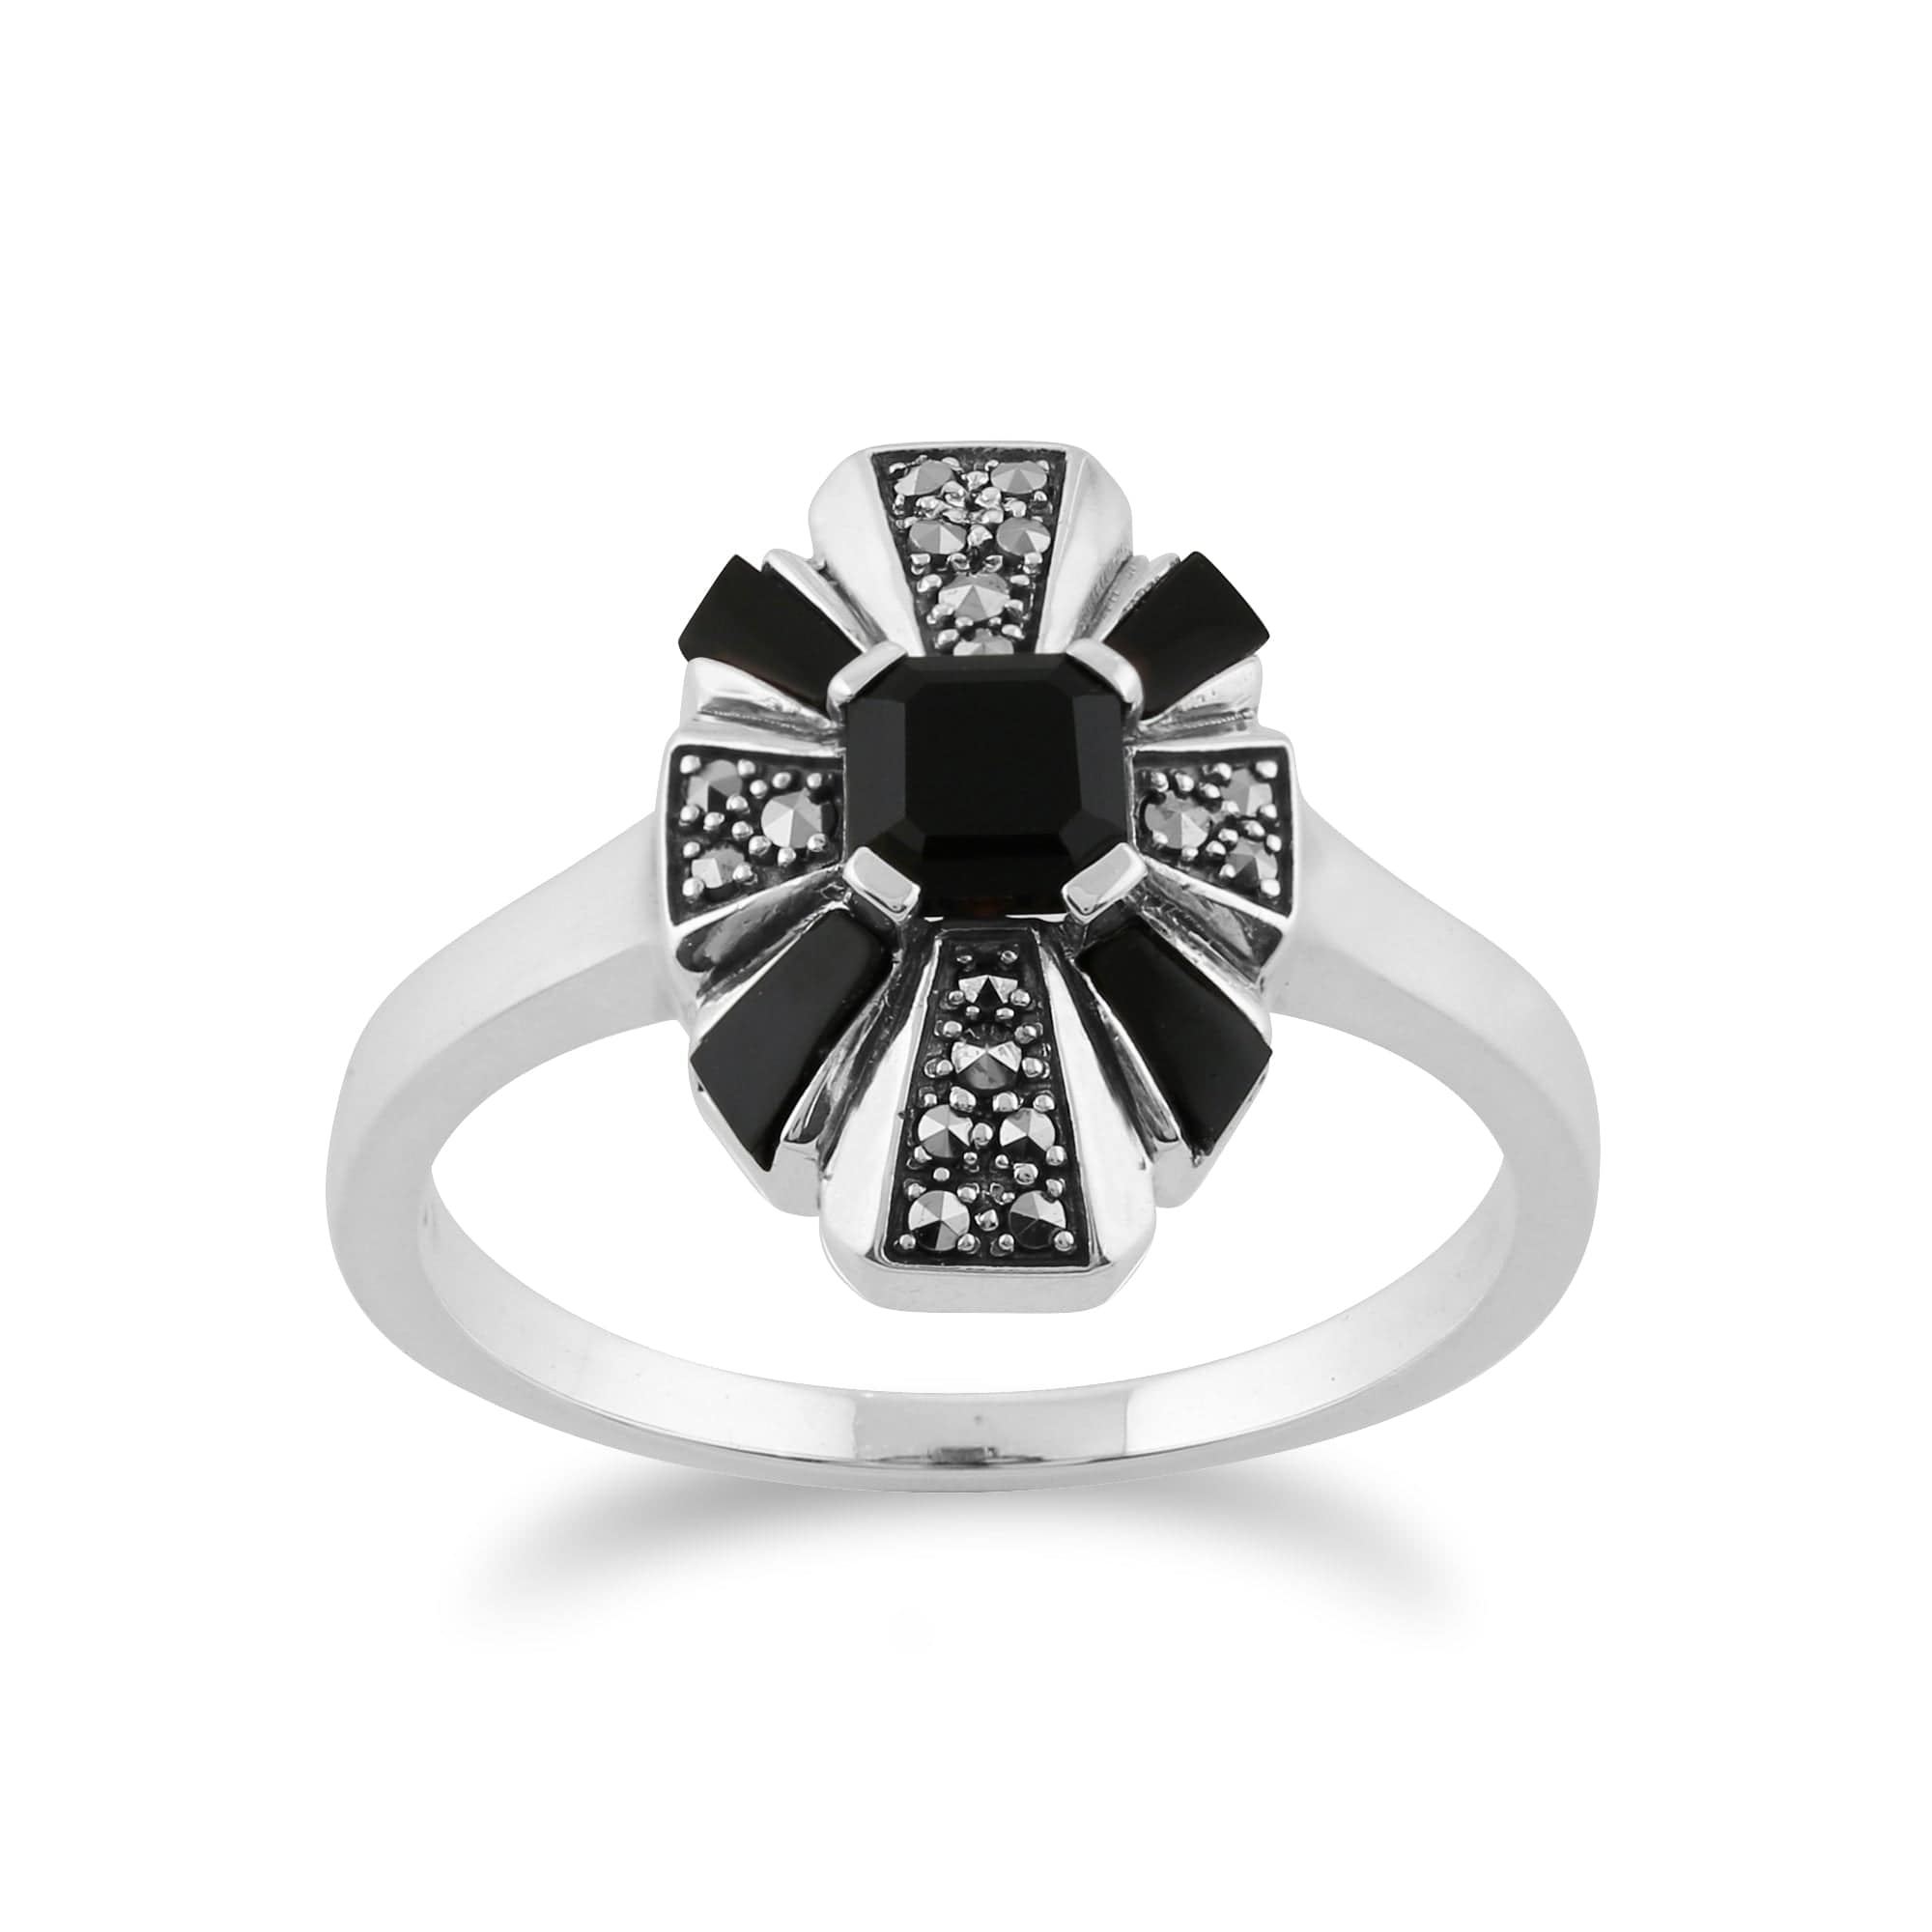 Gemondo 925 Sterling Silver Art Deco Black Onyx & Marcasite Ring Image 1